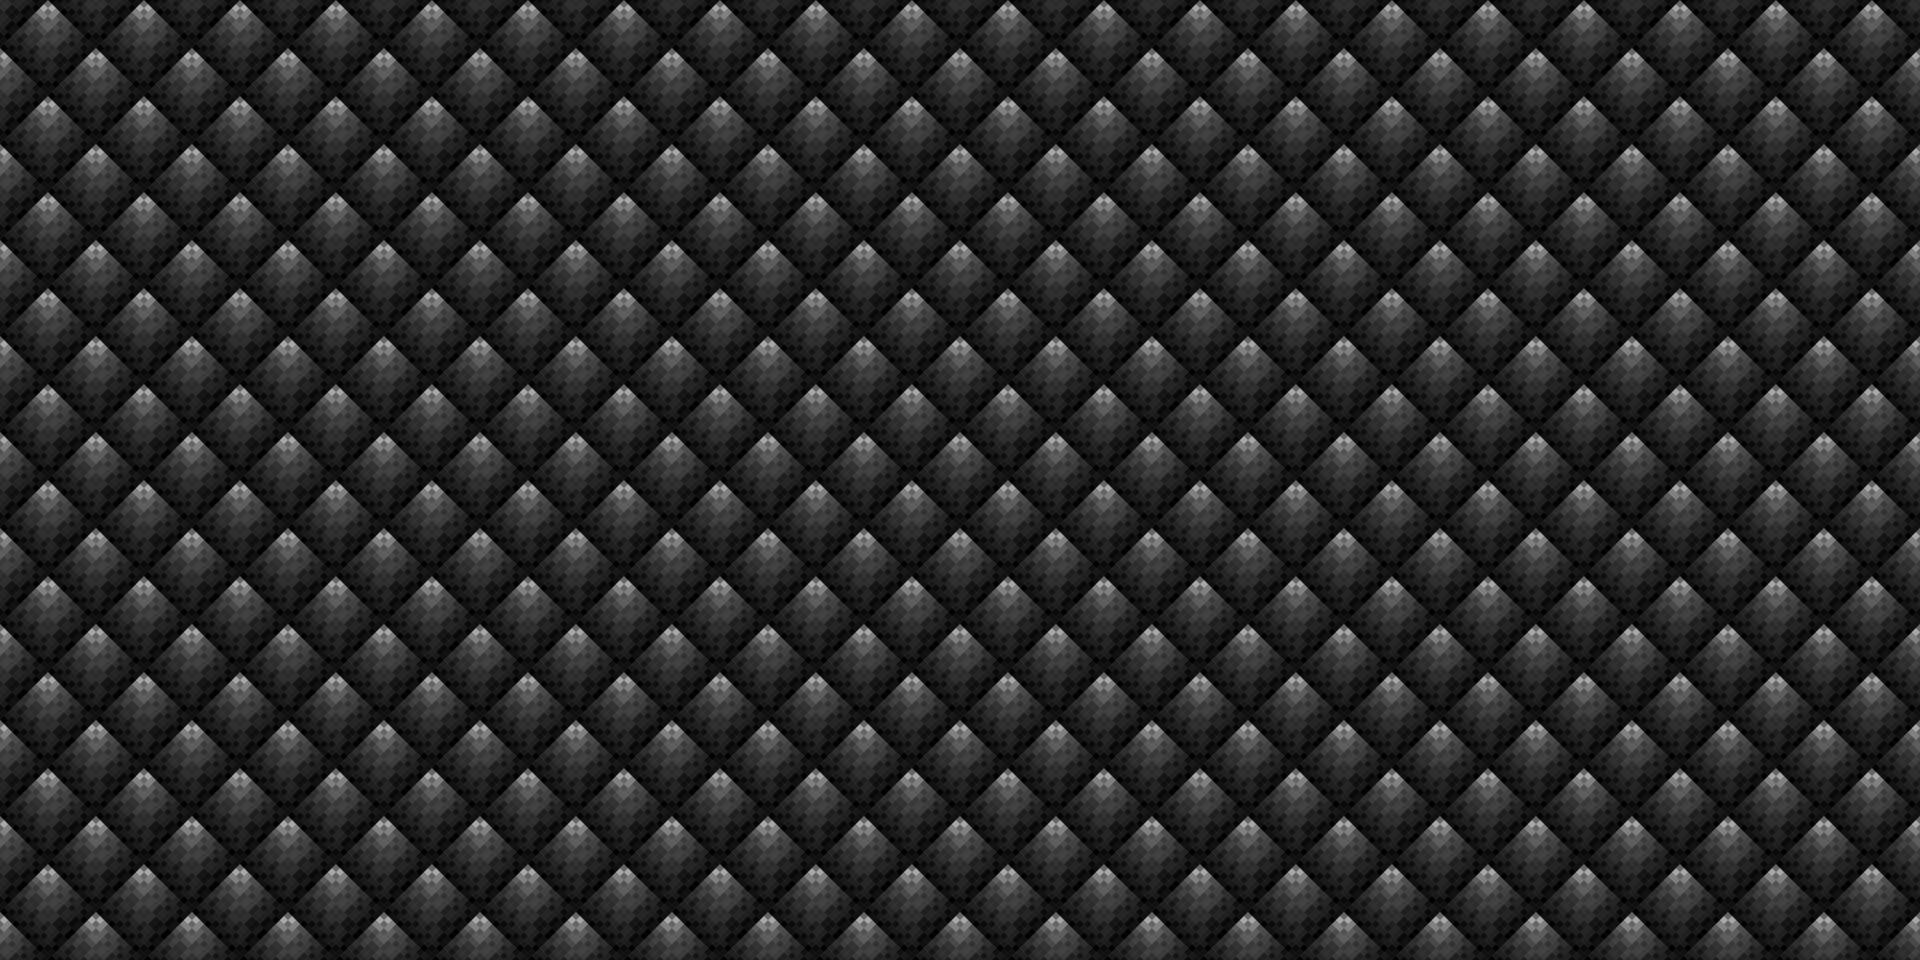 mörk svart pixel mosaik- abstrakt sömlös geometrisk rutnät bakgrund vektor